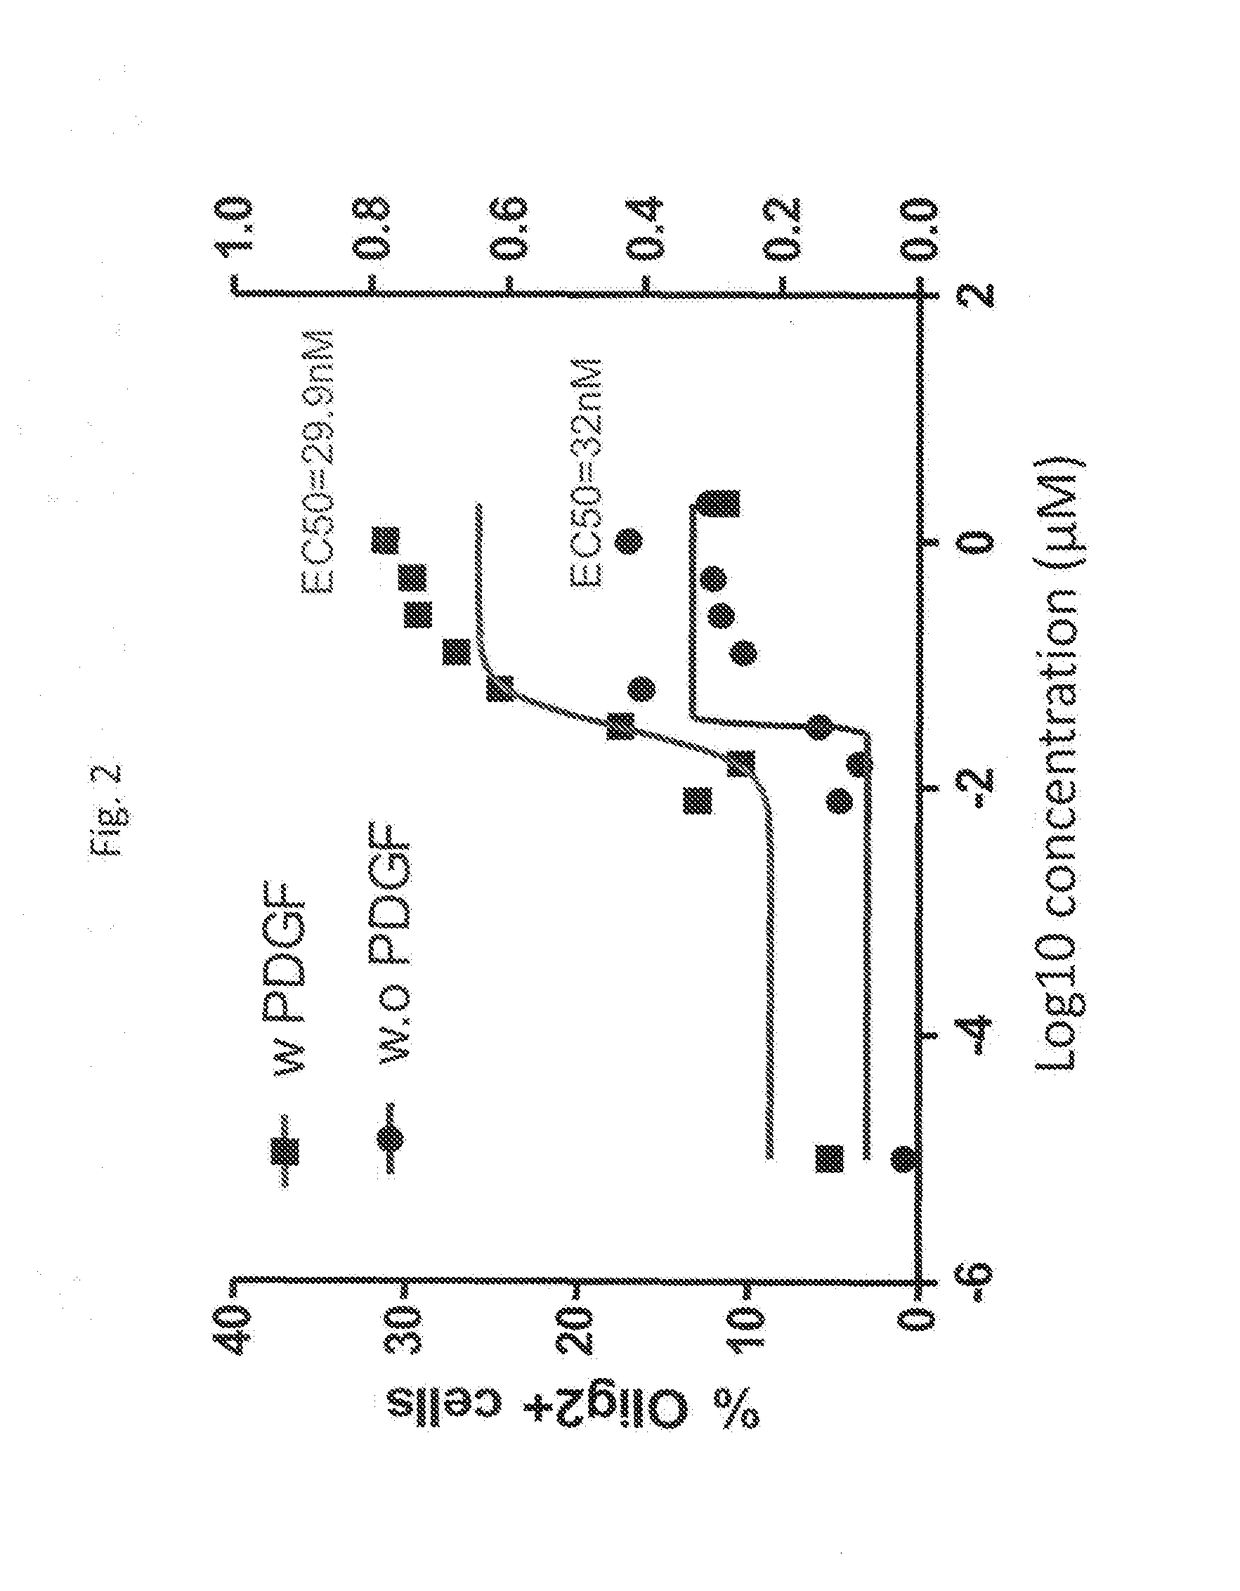 Methods of inducing myelination and maturation of oligodendrocytes